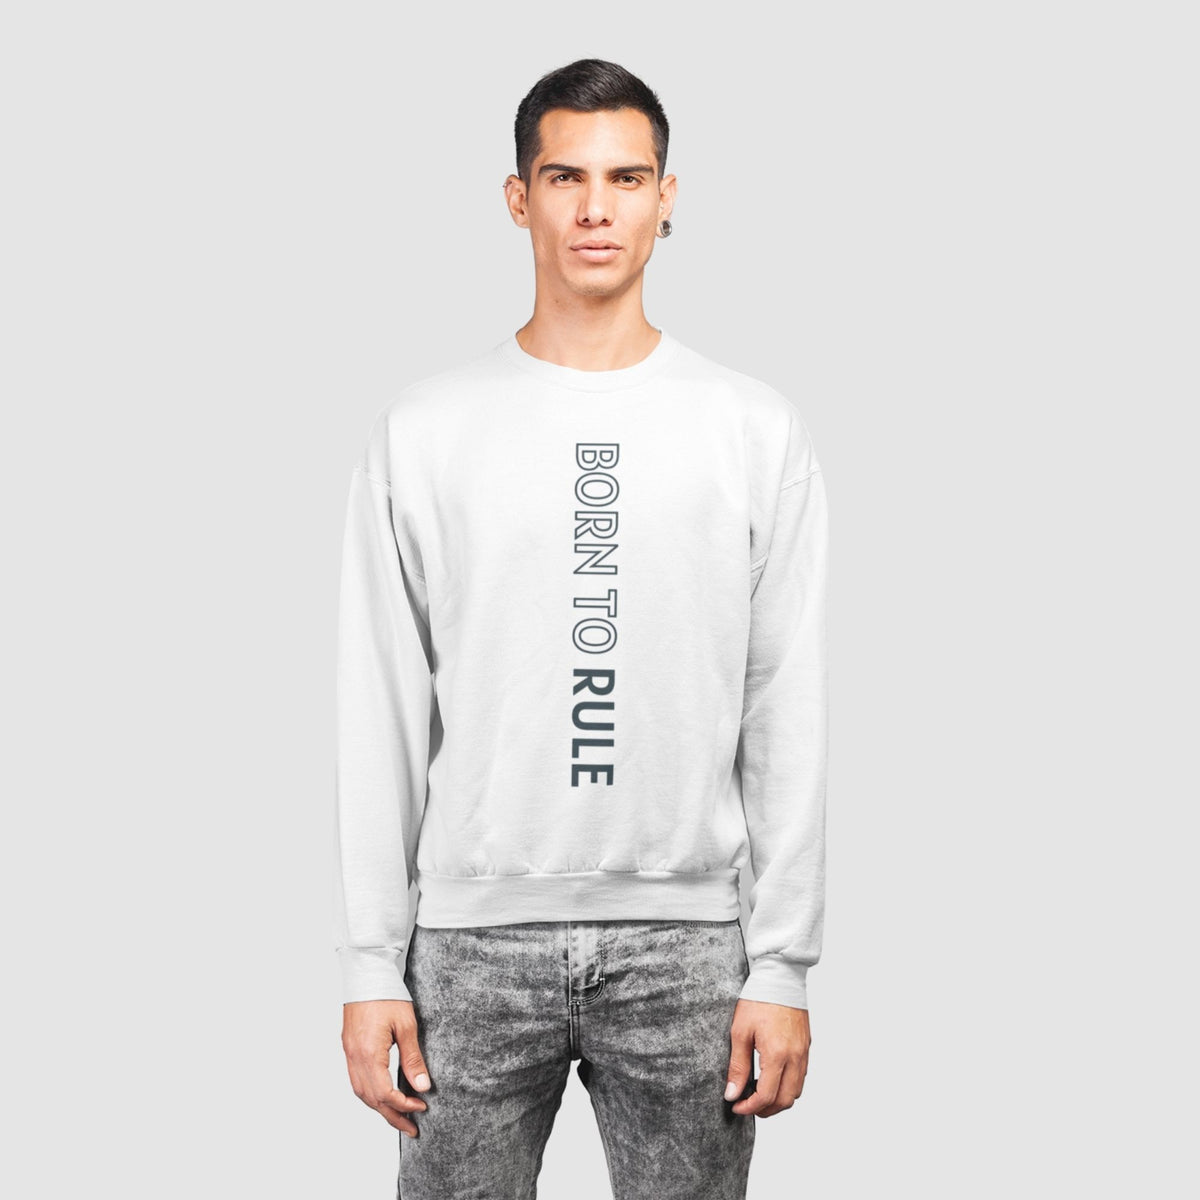 born-to-rule-cotton-printed-unisex-white-men-model-sweatshirt-gogirgit-com